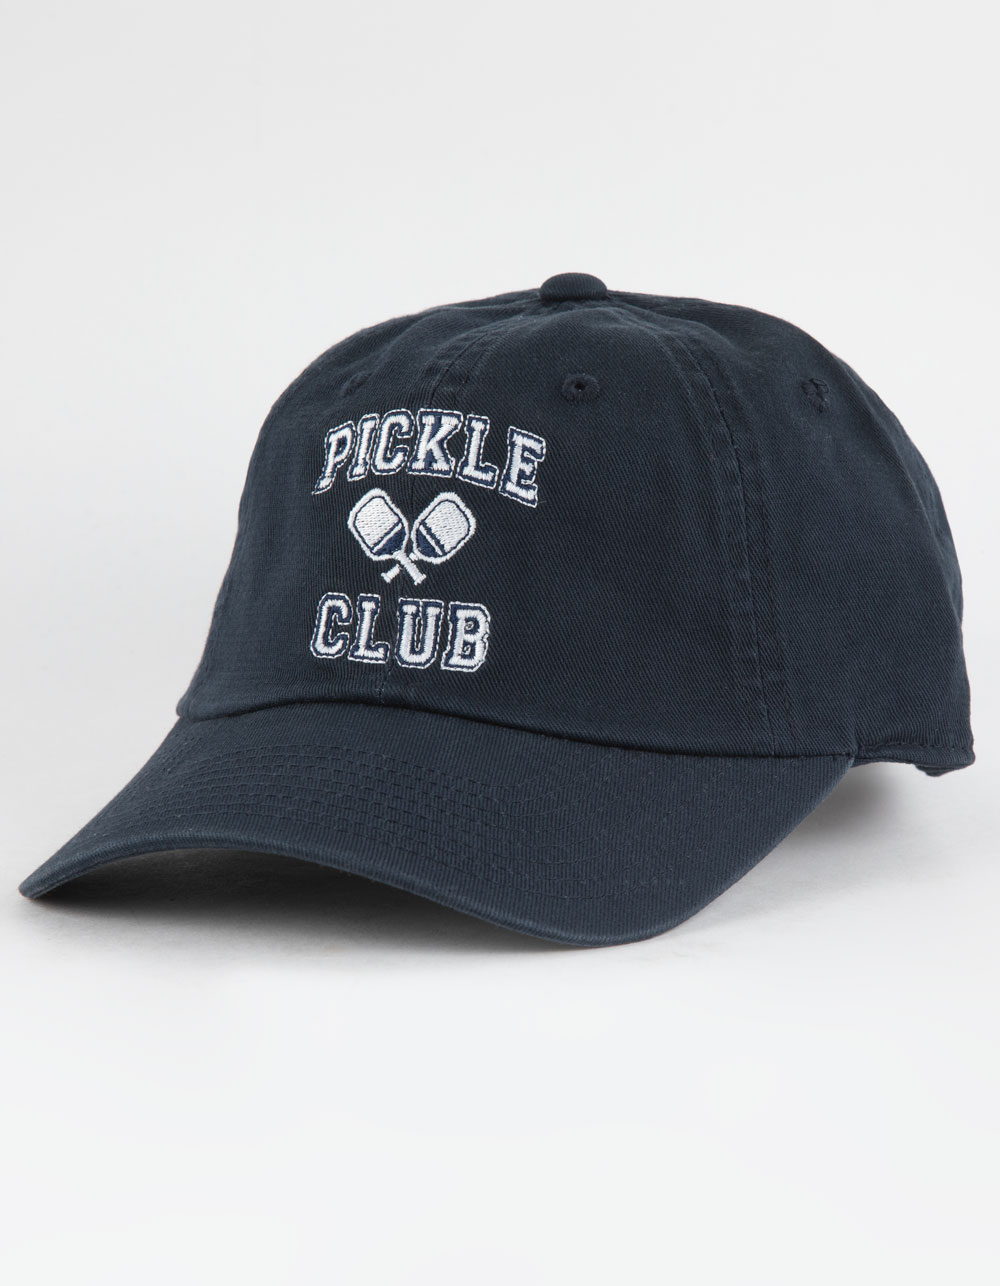 AMERICAN NEEDLE Pickle Club Strapback Hat